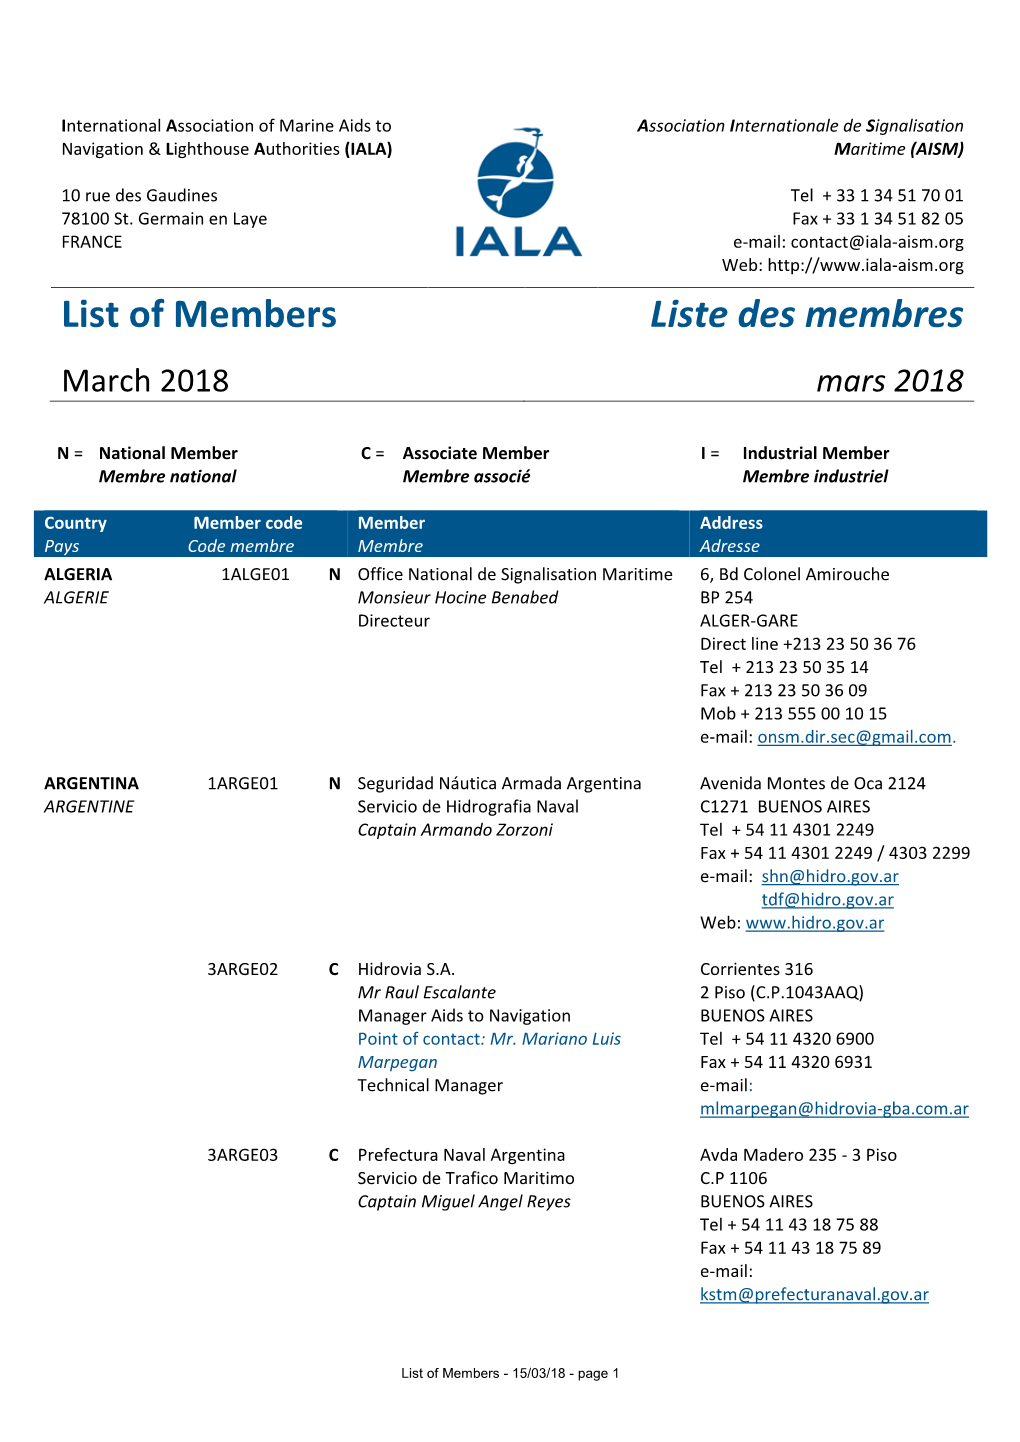 Association Internationale De Signalisation Navigation & Lighthouse Authorities (IALA) Maritime (AISM)